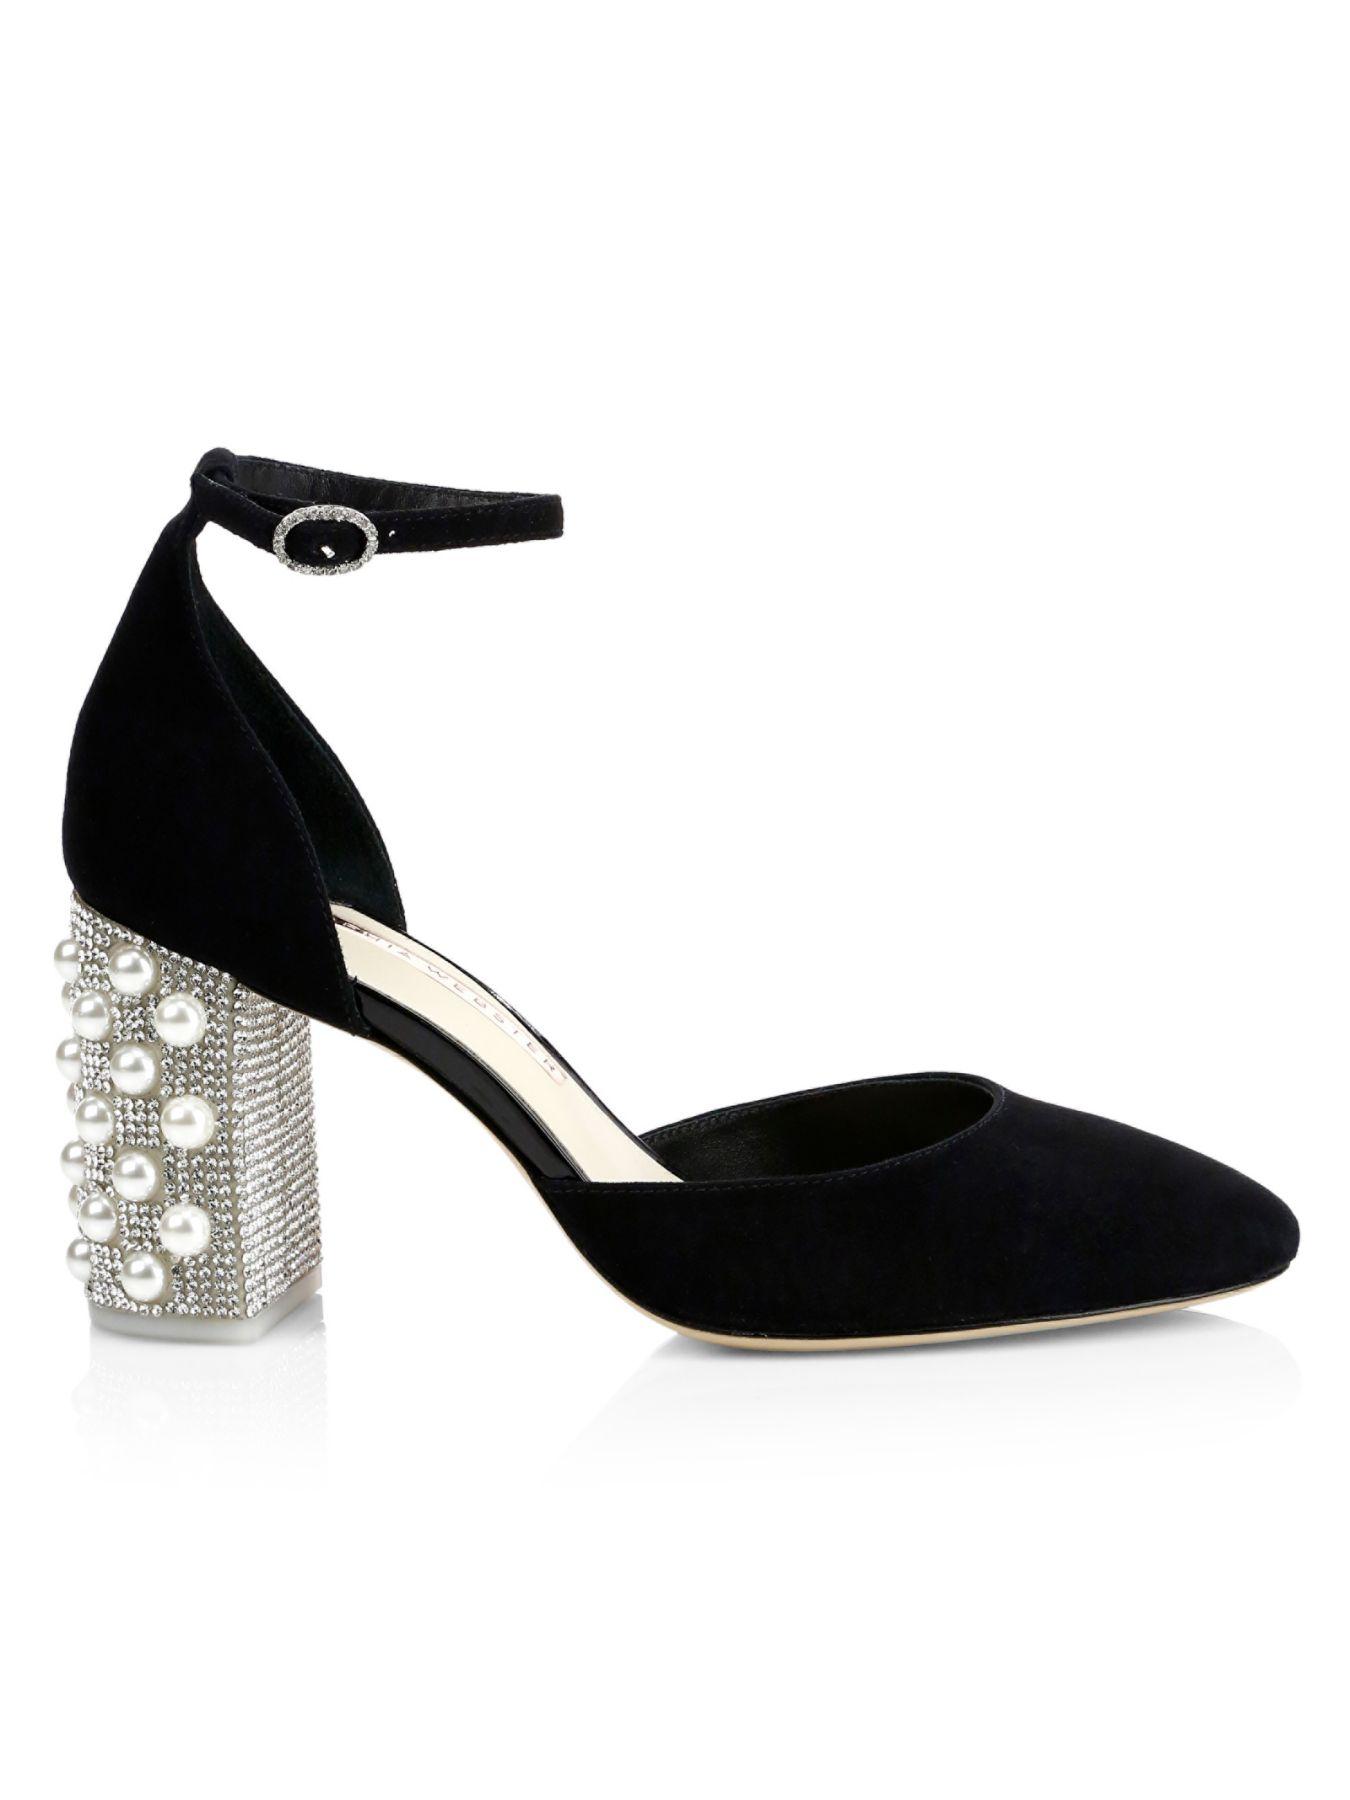 sophia webster block heel